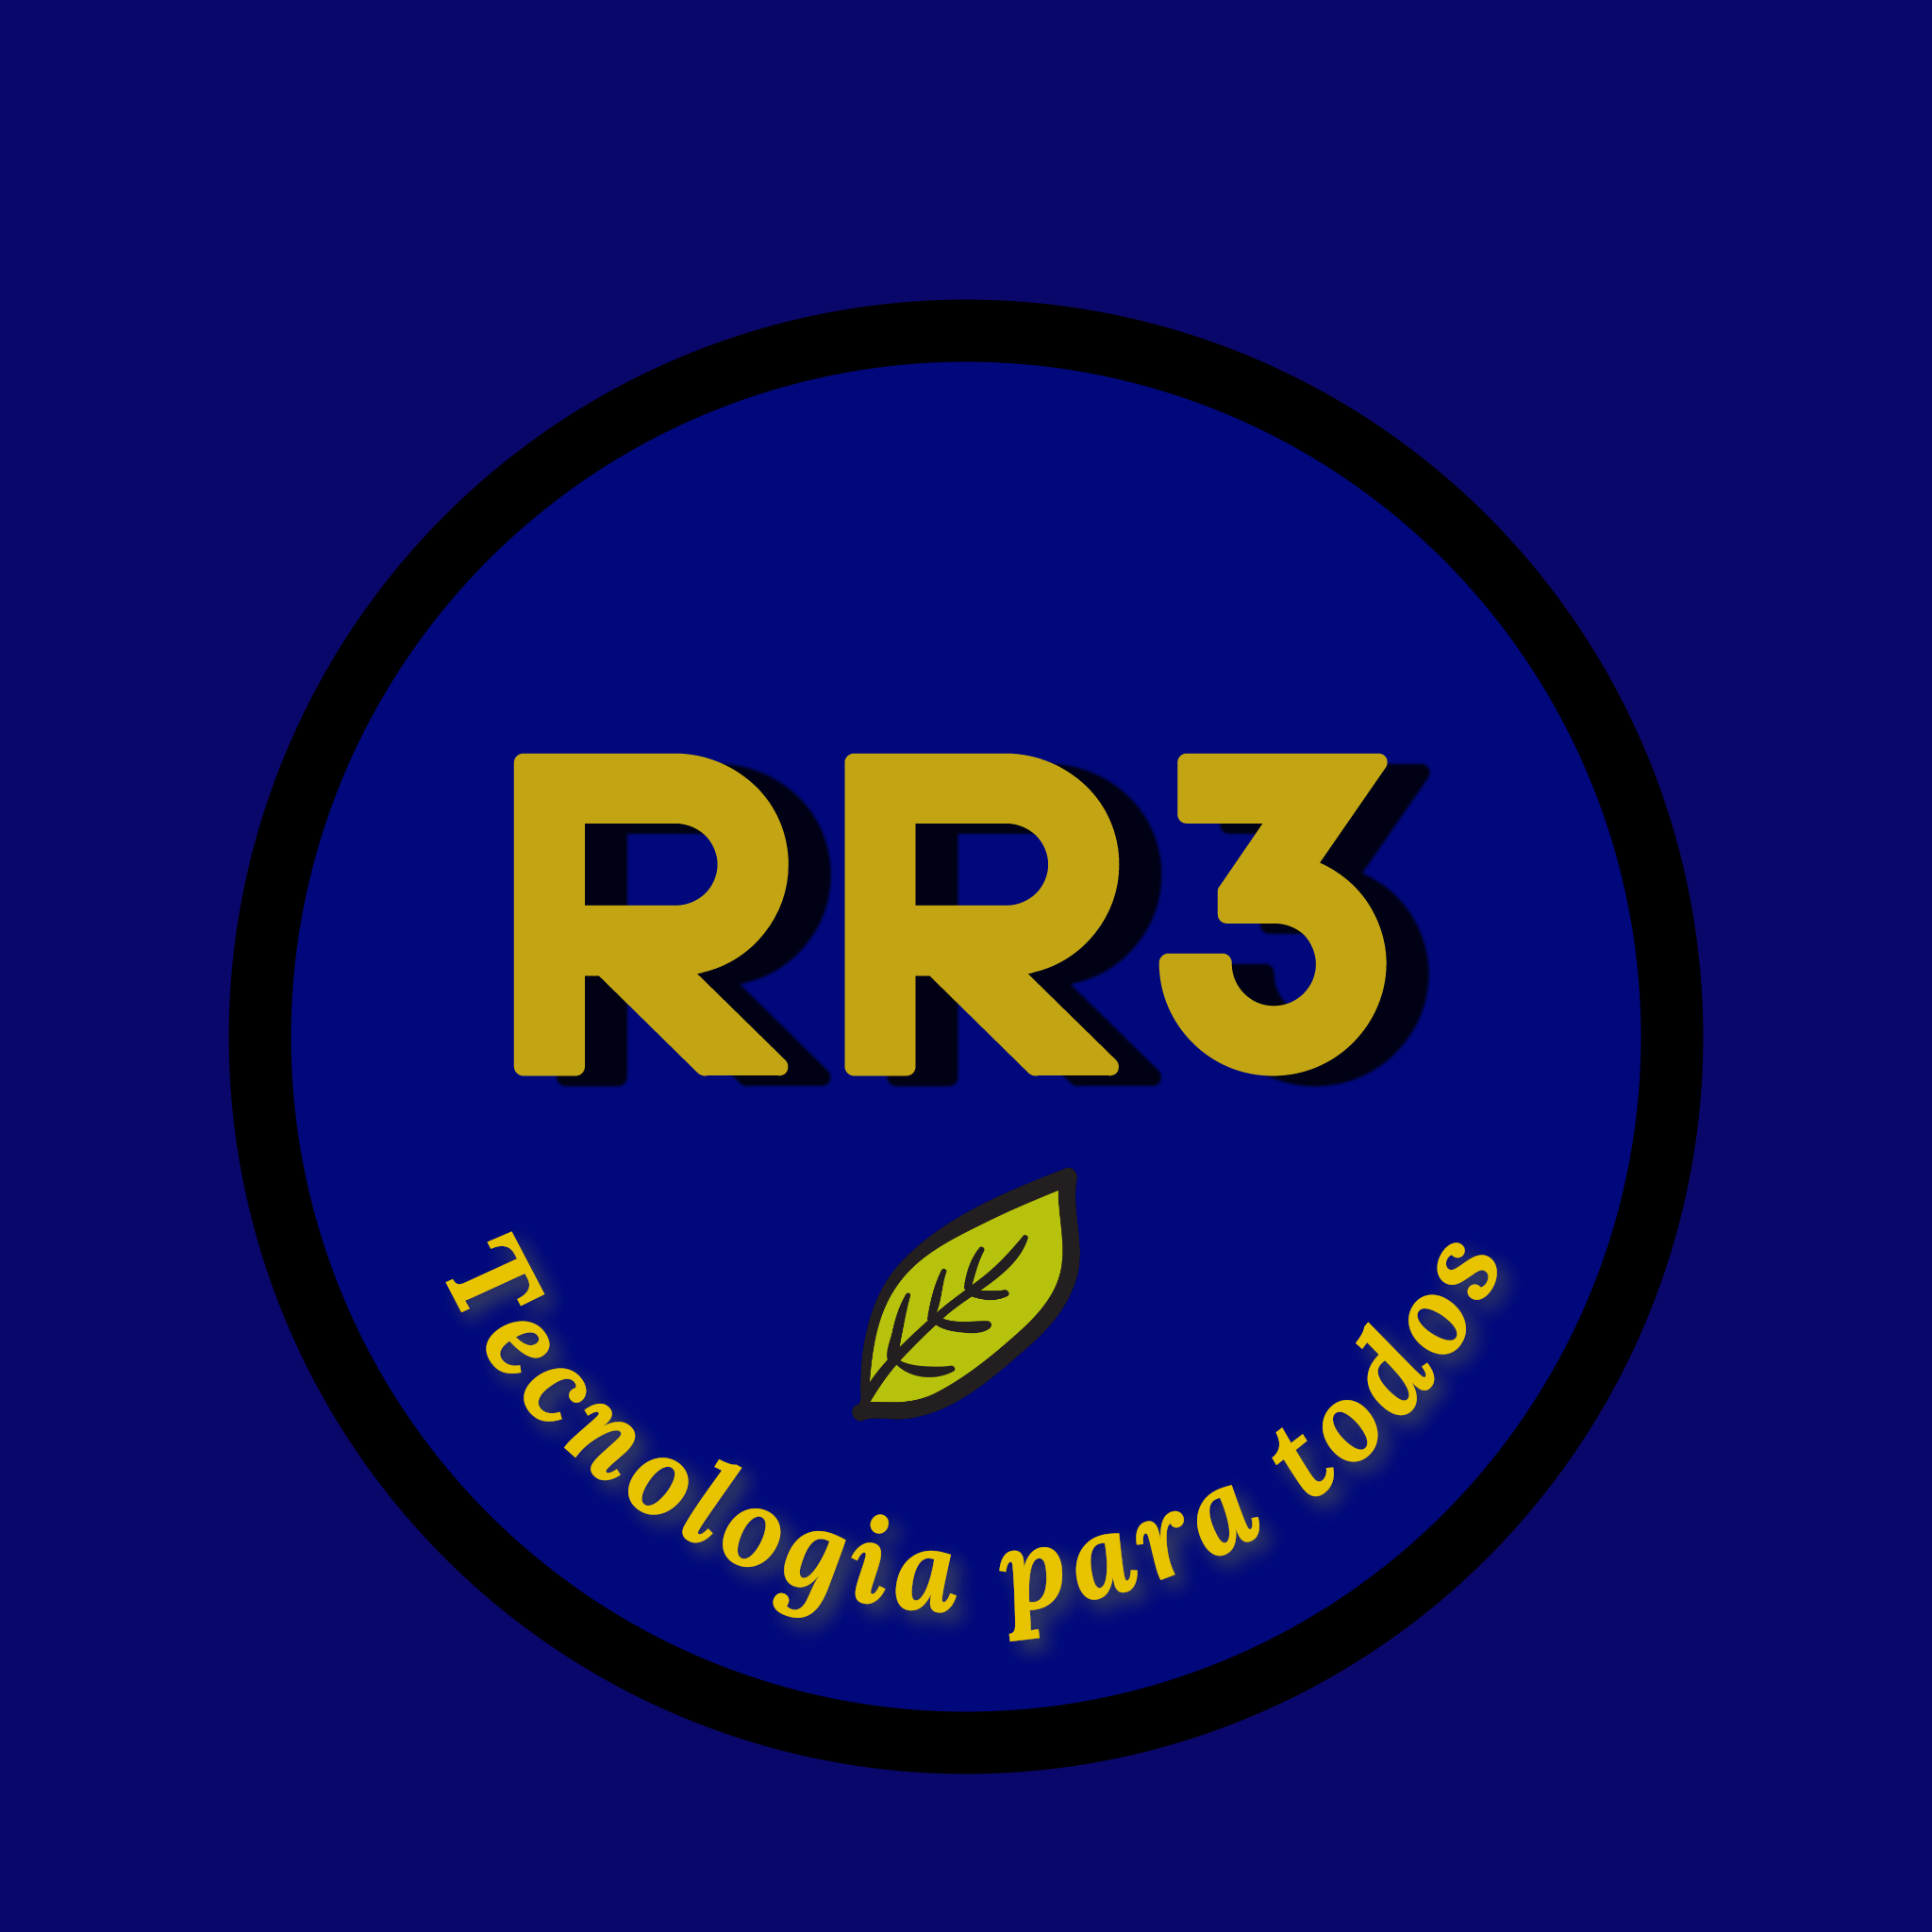 RR3